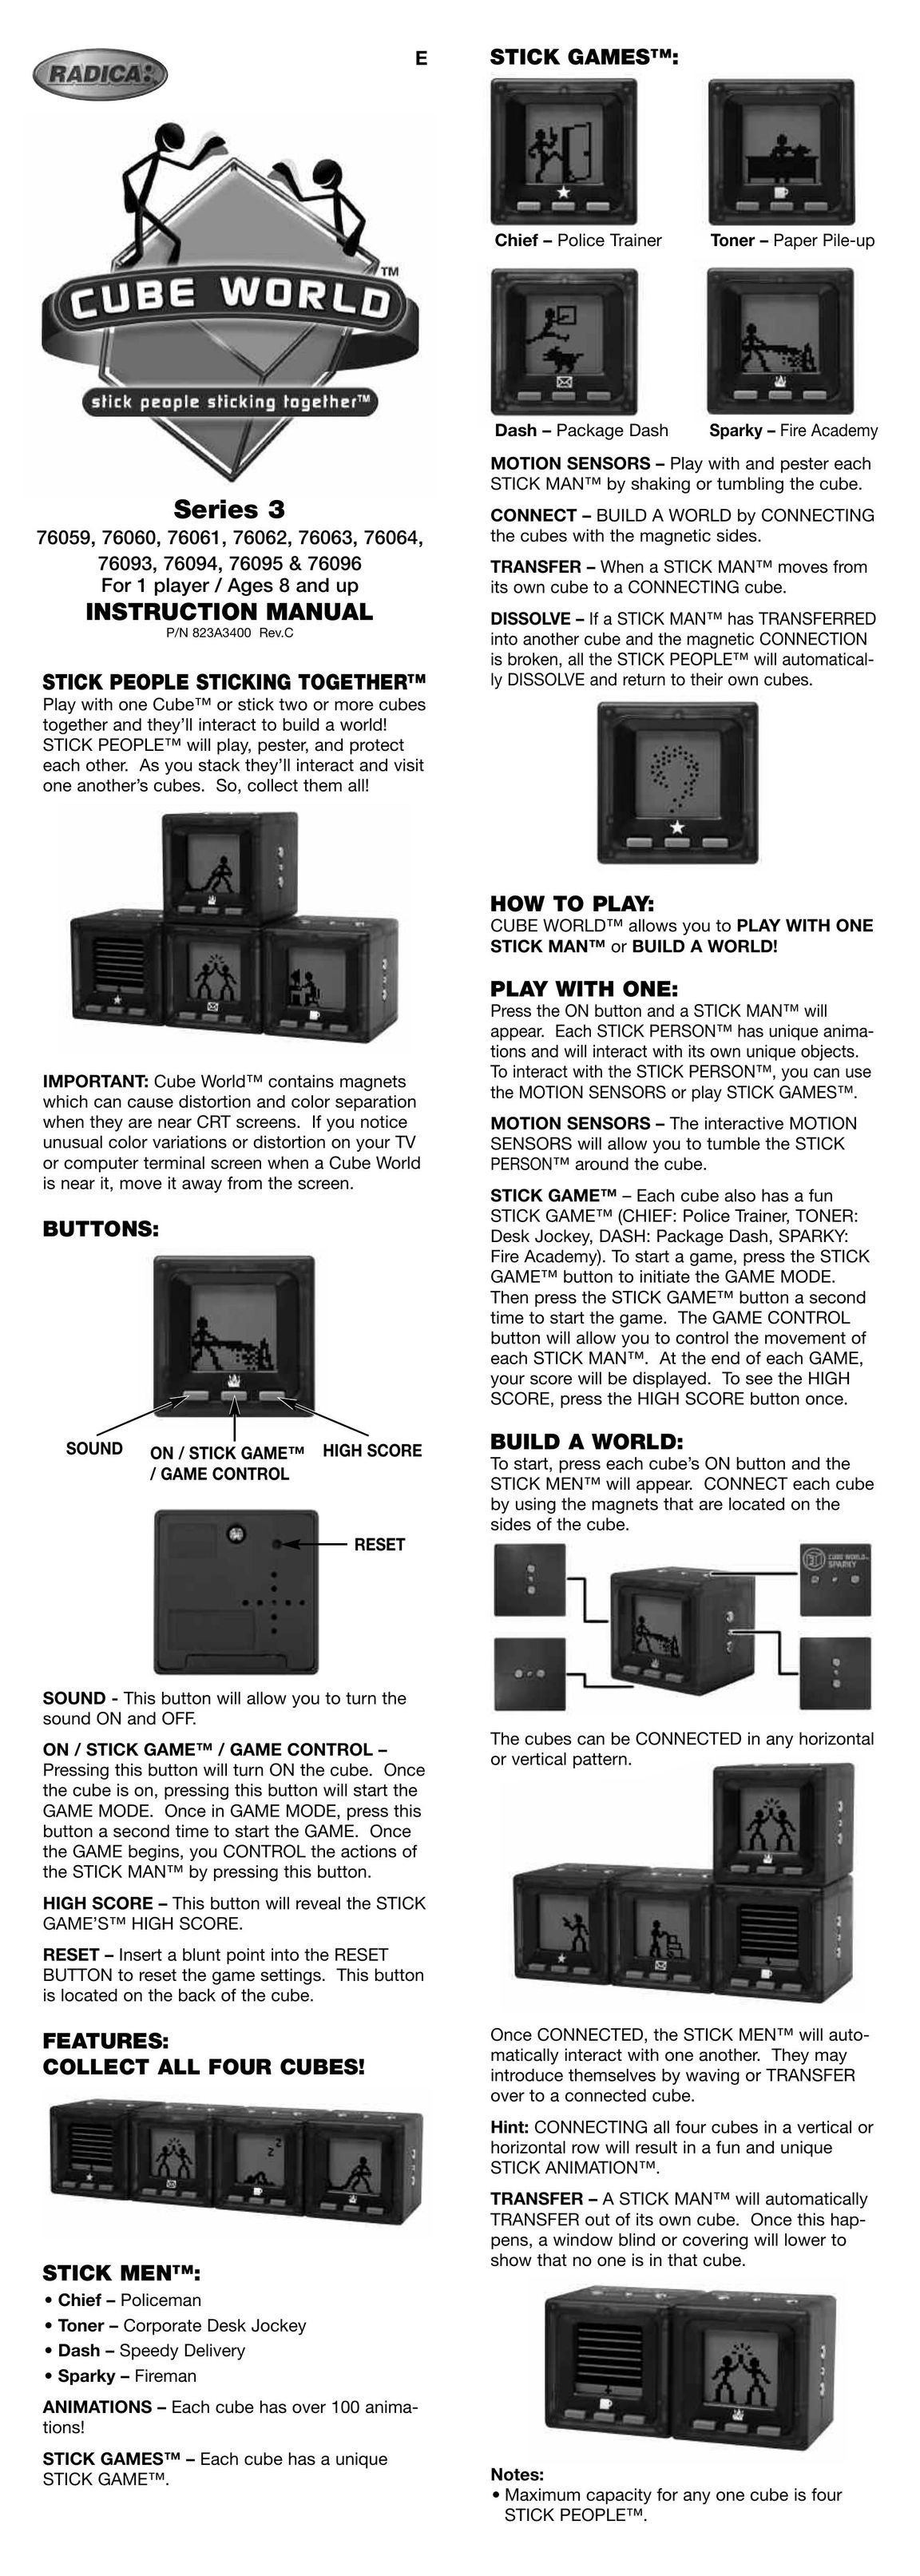 Radica Games 76064 Handheld Game System User Manual